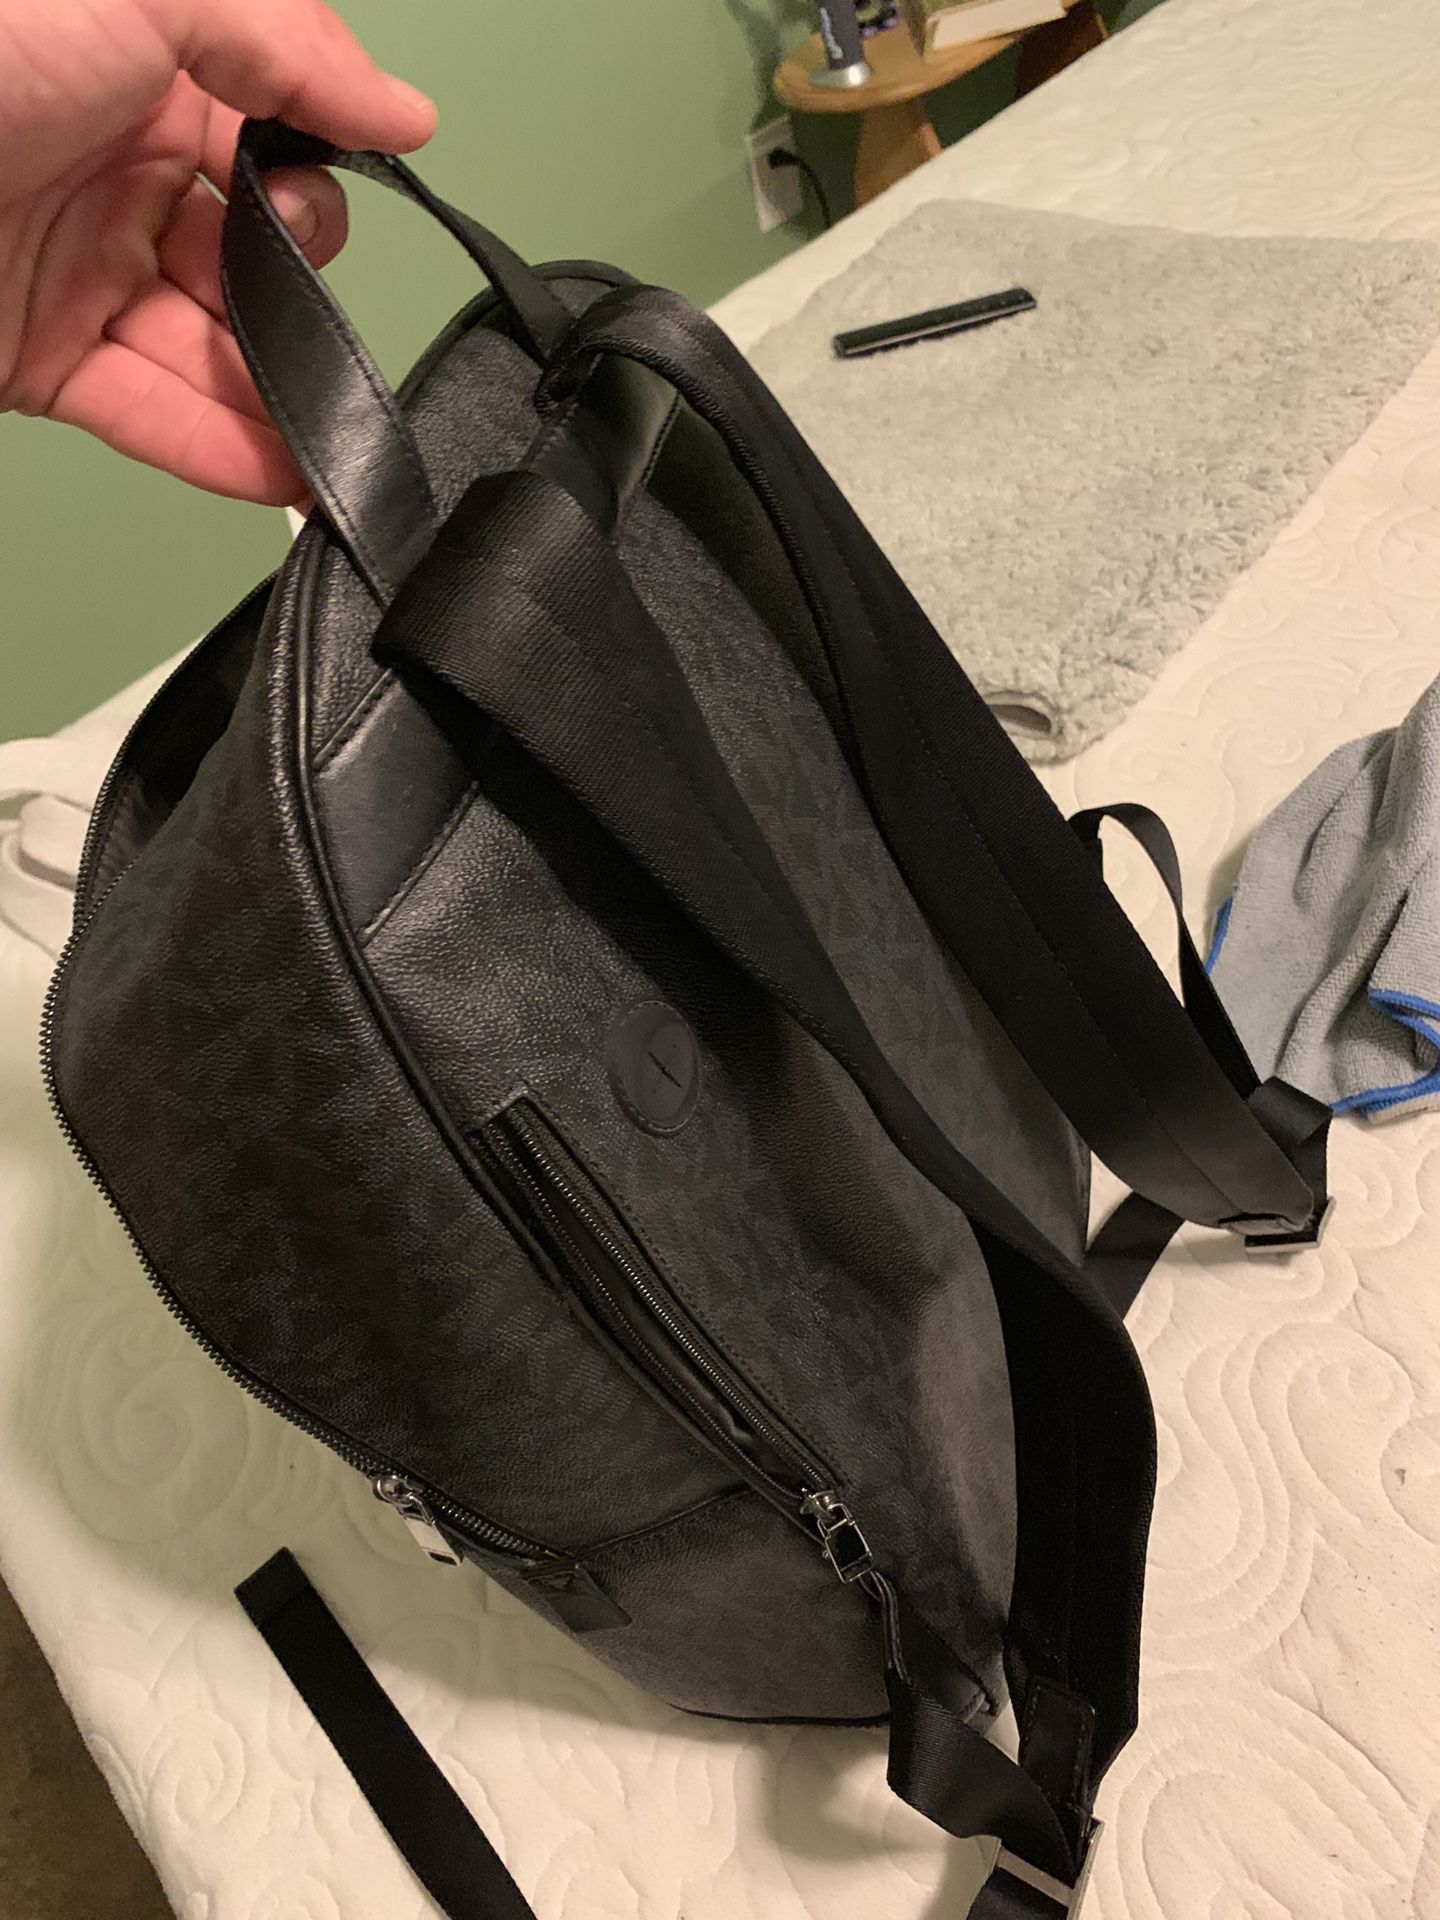 Michael Kors black leather backpack